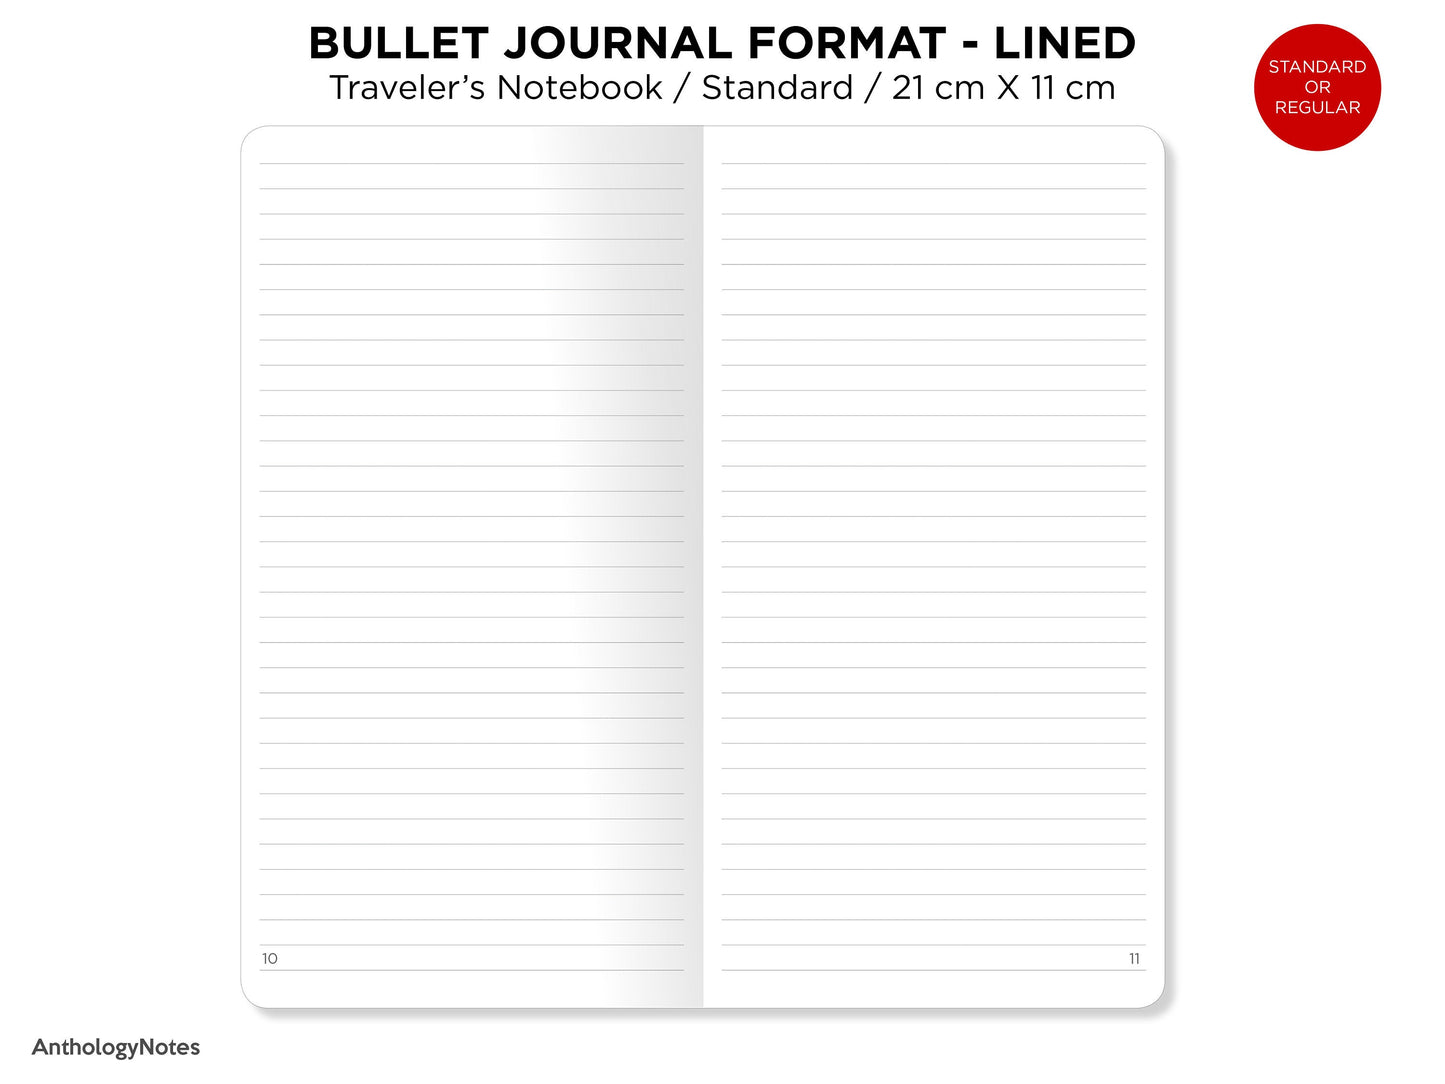 TN Standard Size BULLET SYSTEM Lined Ruled Traveler's Notebook Printable Insert